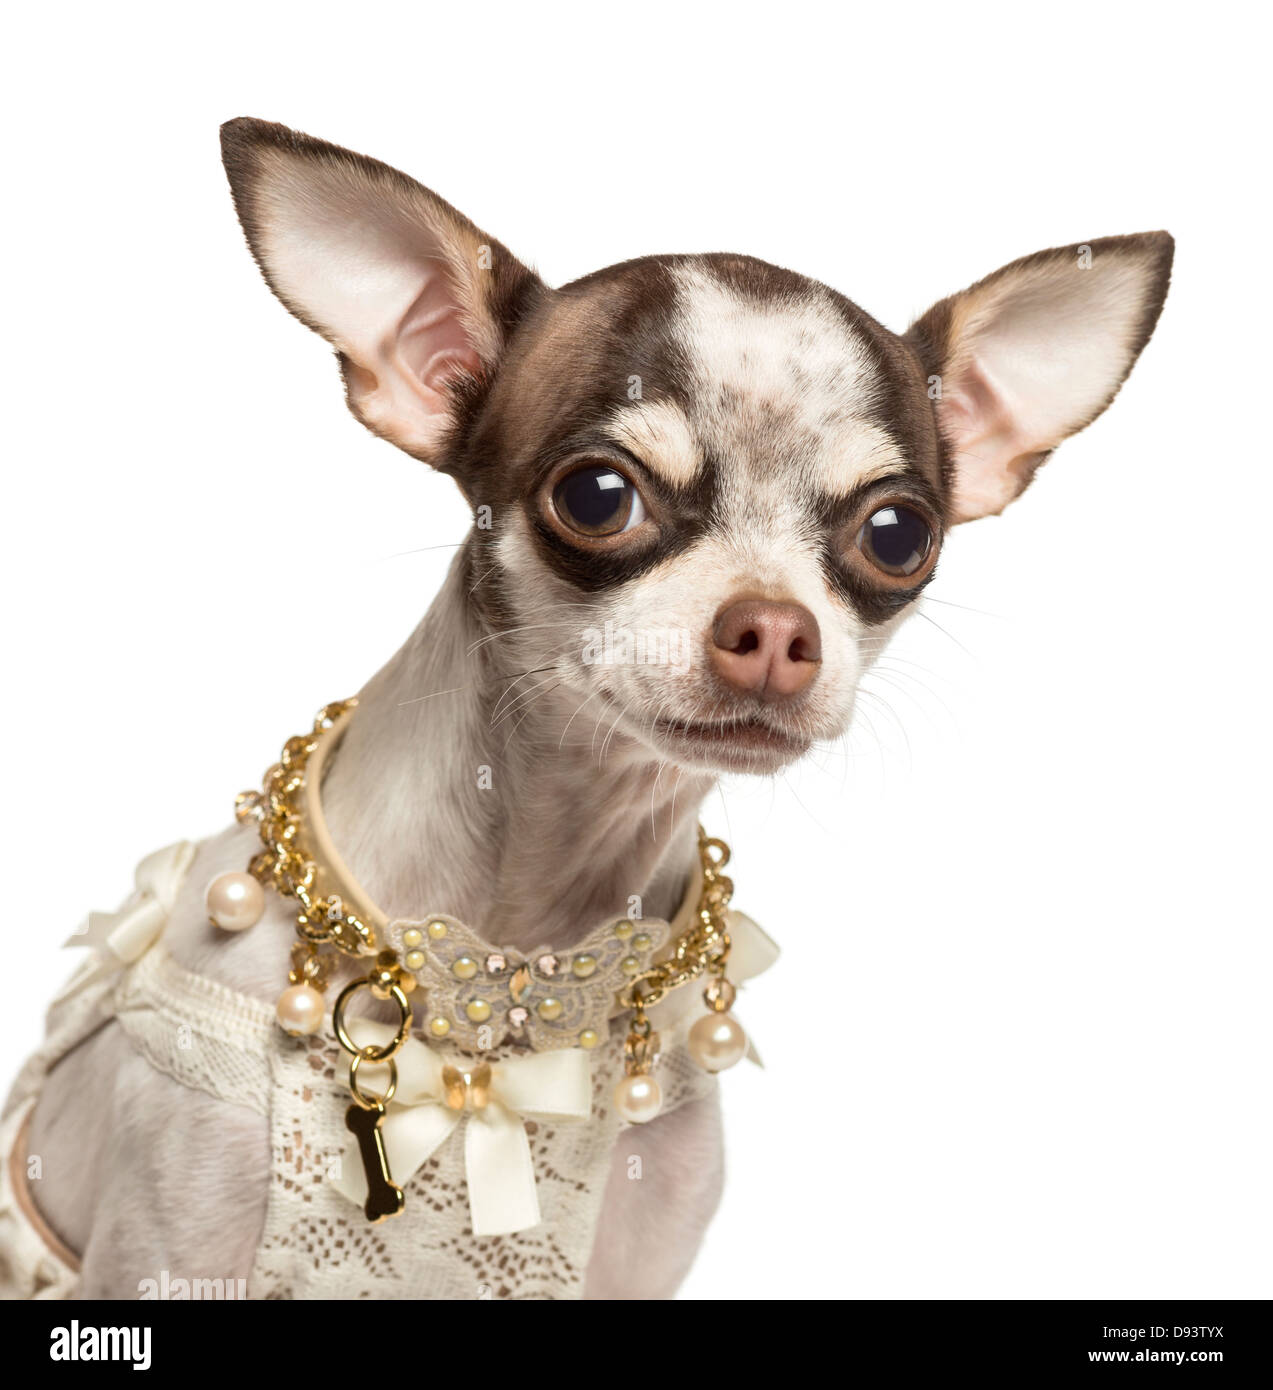 Collar De Perro De Oro Fotos e Imágenes de stock - Alamy